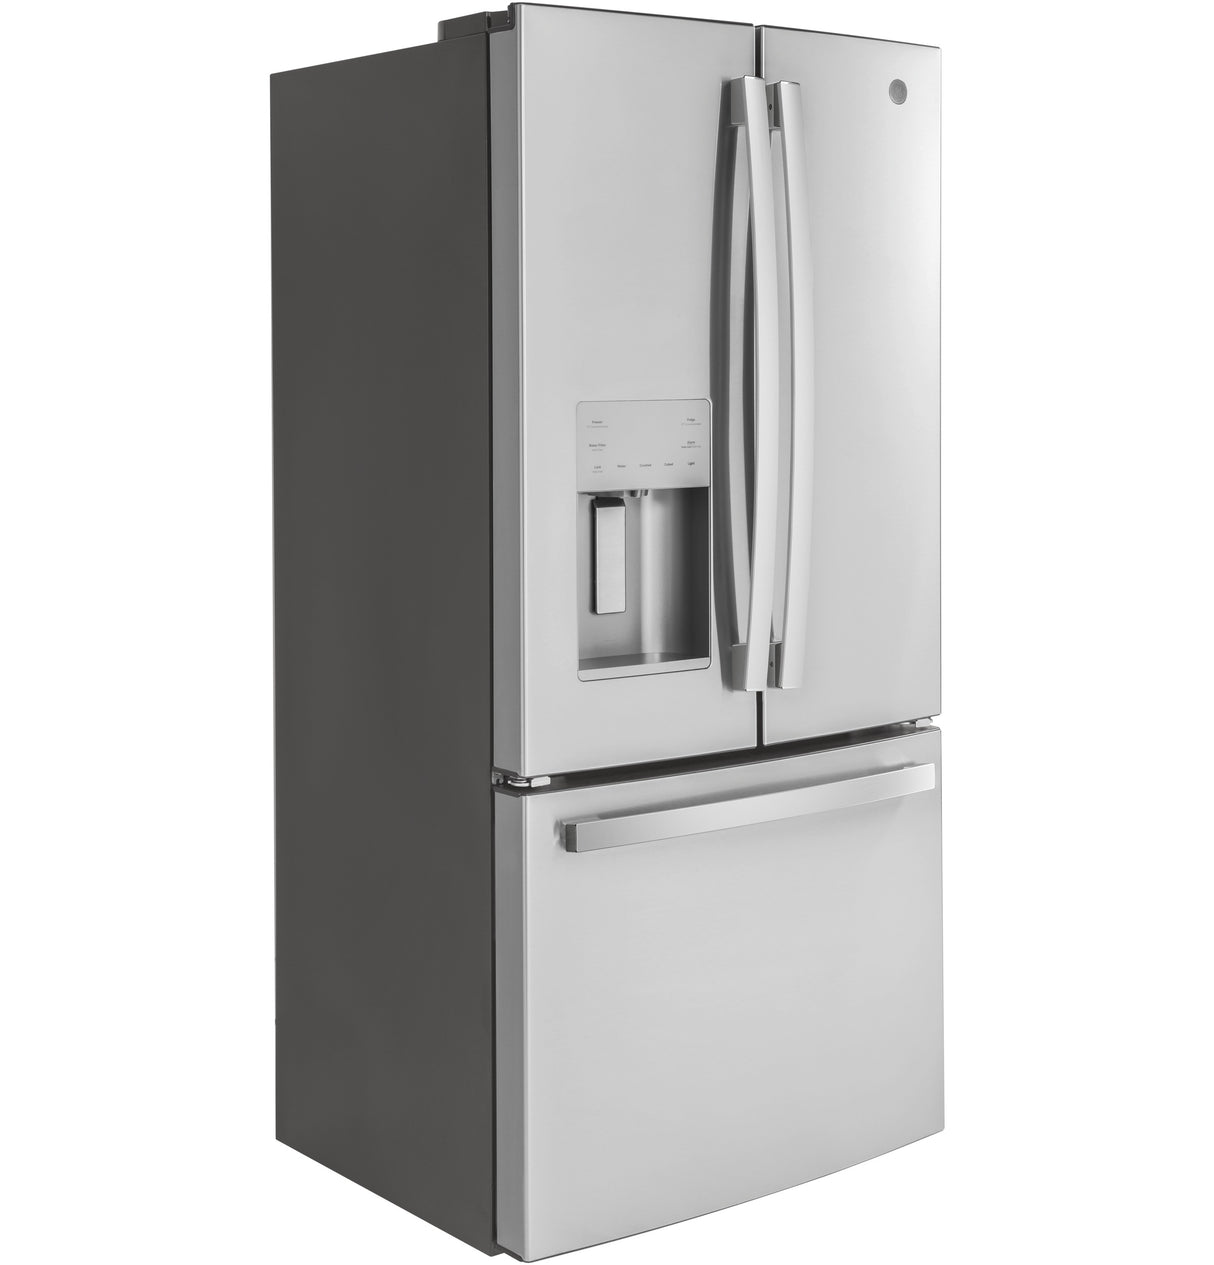 GE(R) ENERGY STAR(R) 17.5 Cu. Ft. Counter-Depth French-Door Refrigerator - (GYE18JYLFS)